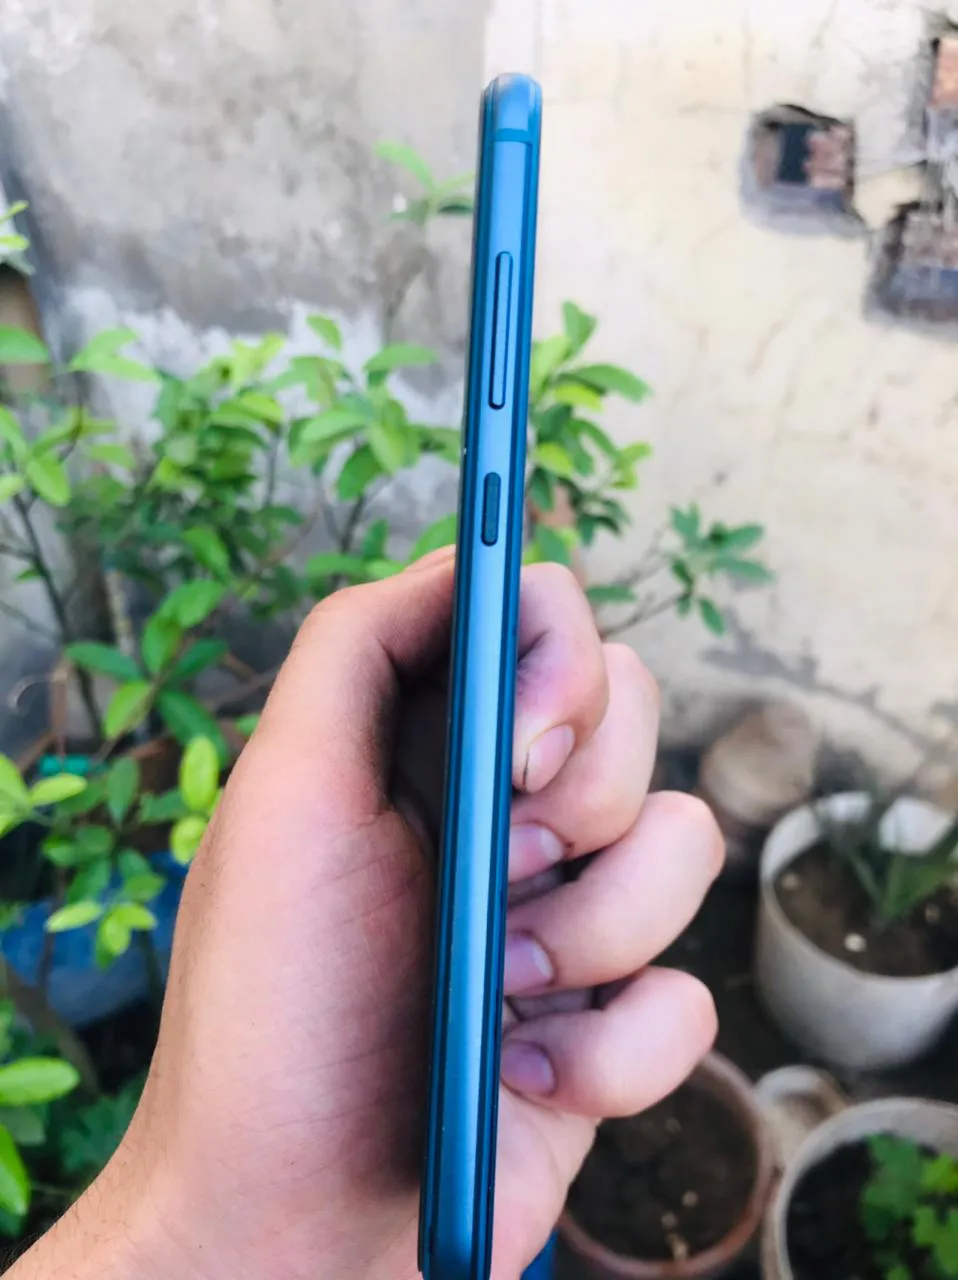 Huawei P10 lite - photo 1